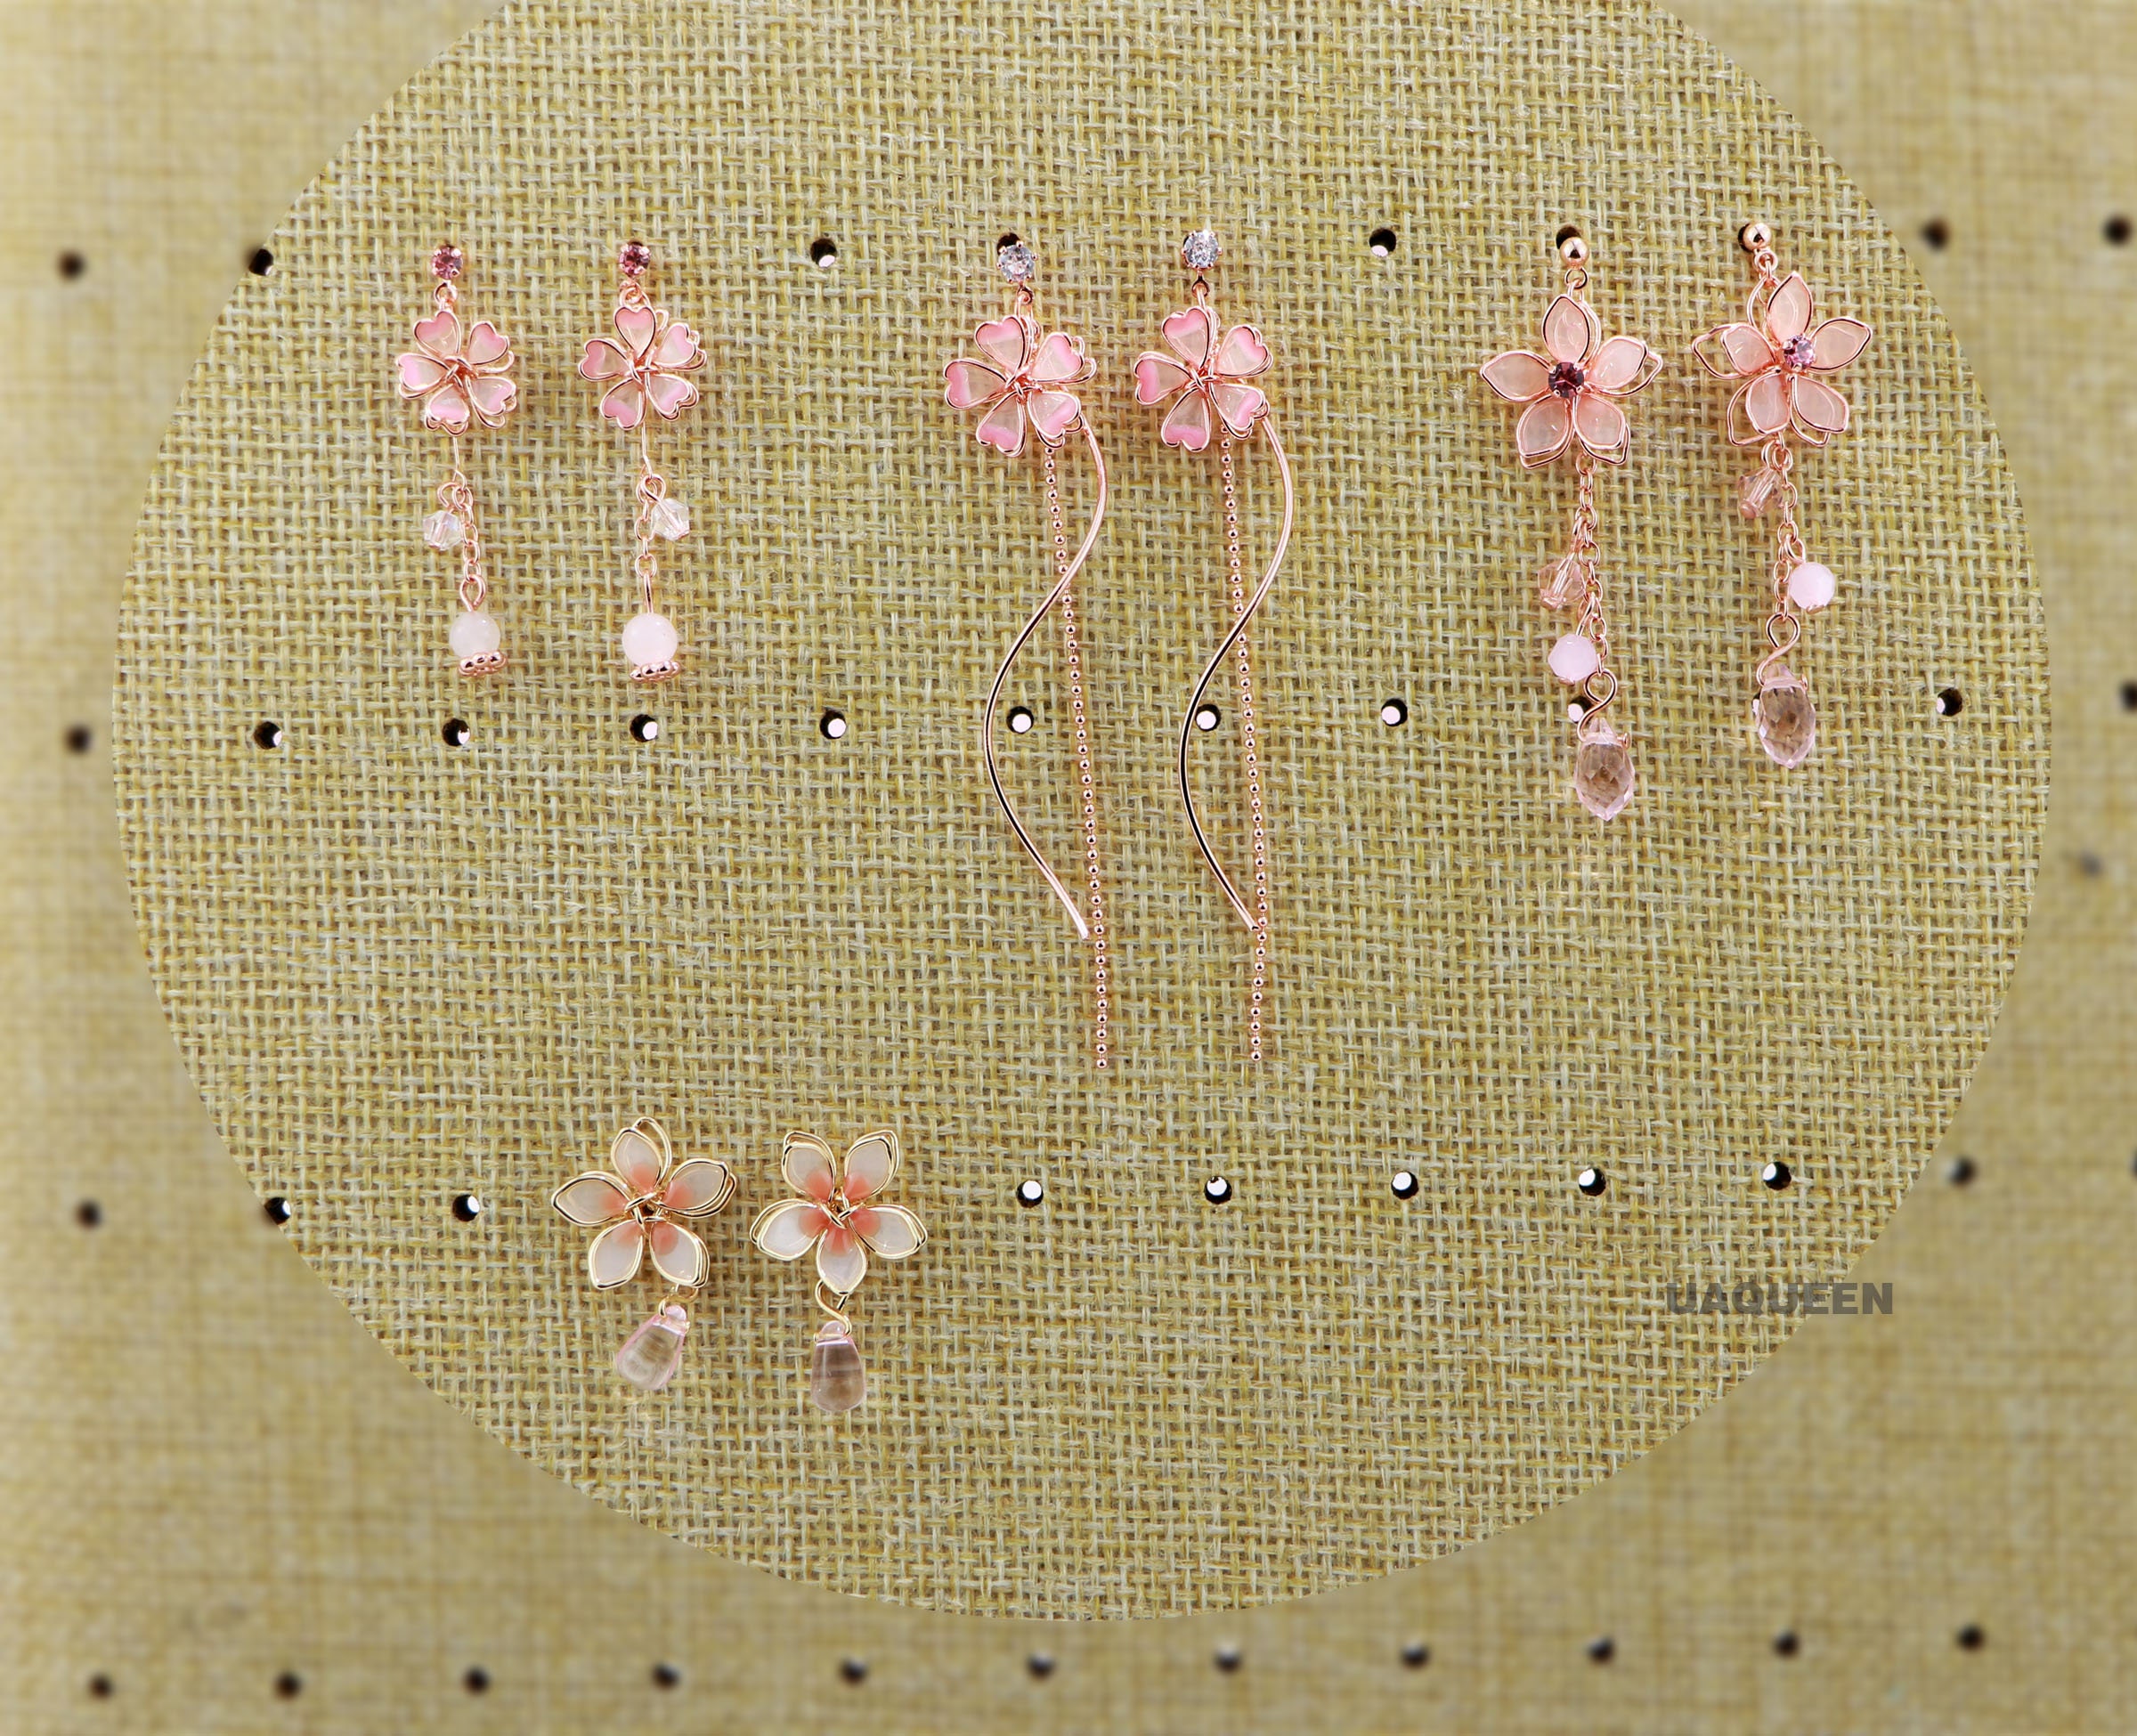 Pastel Cherry Blossom Acrylic Earrings – Momenti di Vita